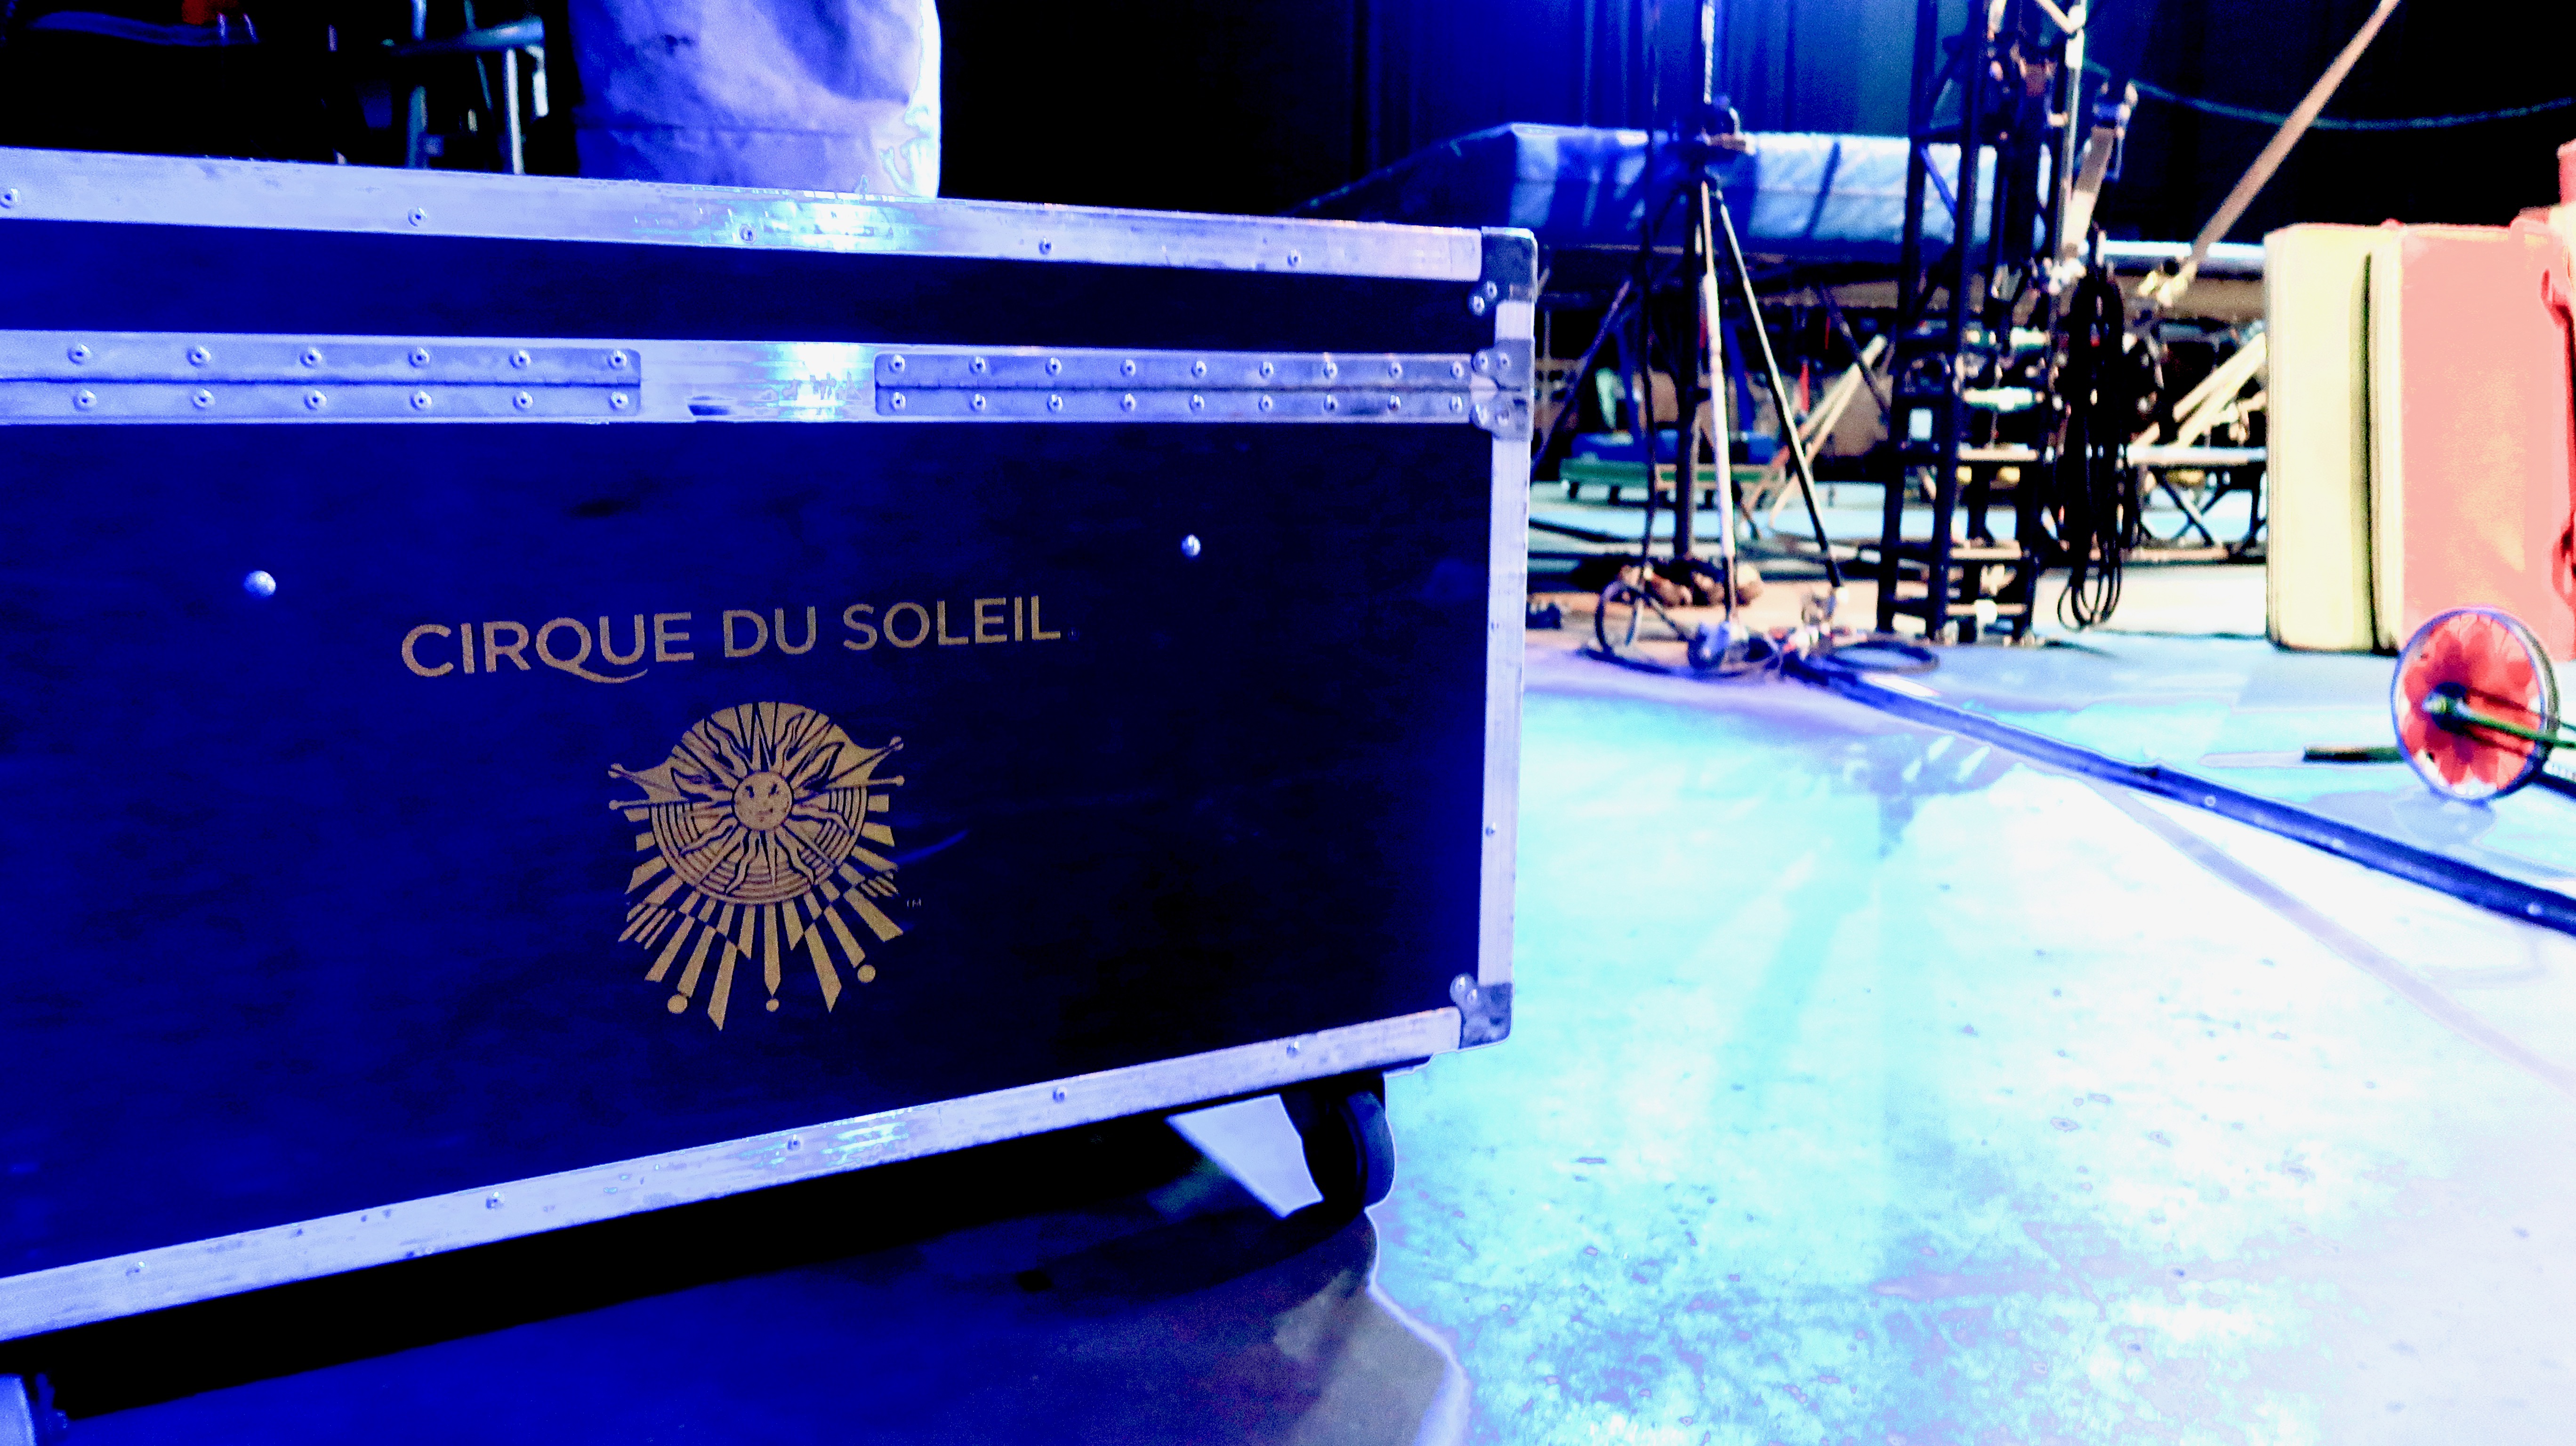 Cirque du Soleil OVO Arena Tour Show | UK & Europe | Shows & Theatre, Entertainment | Elle Blonde Luxury Lifestyle Destination Blog